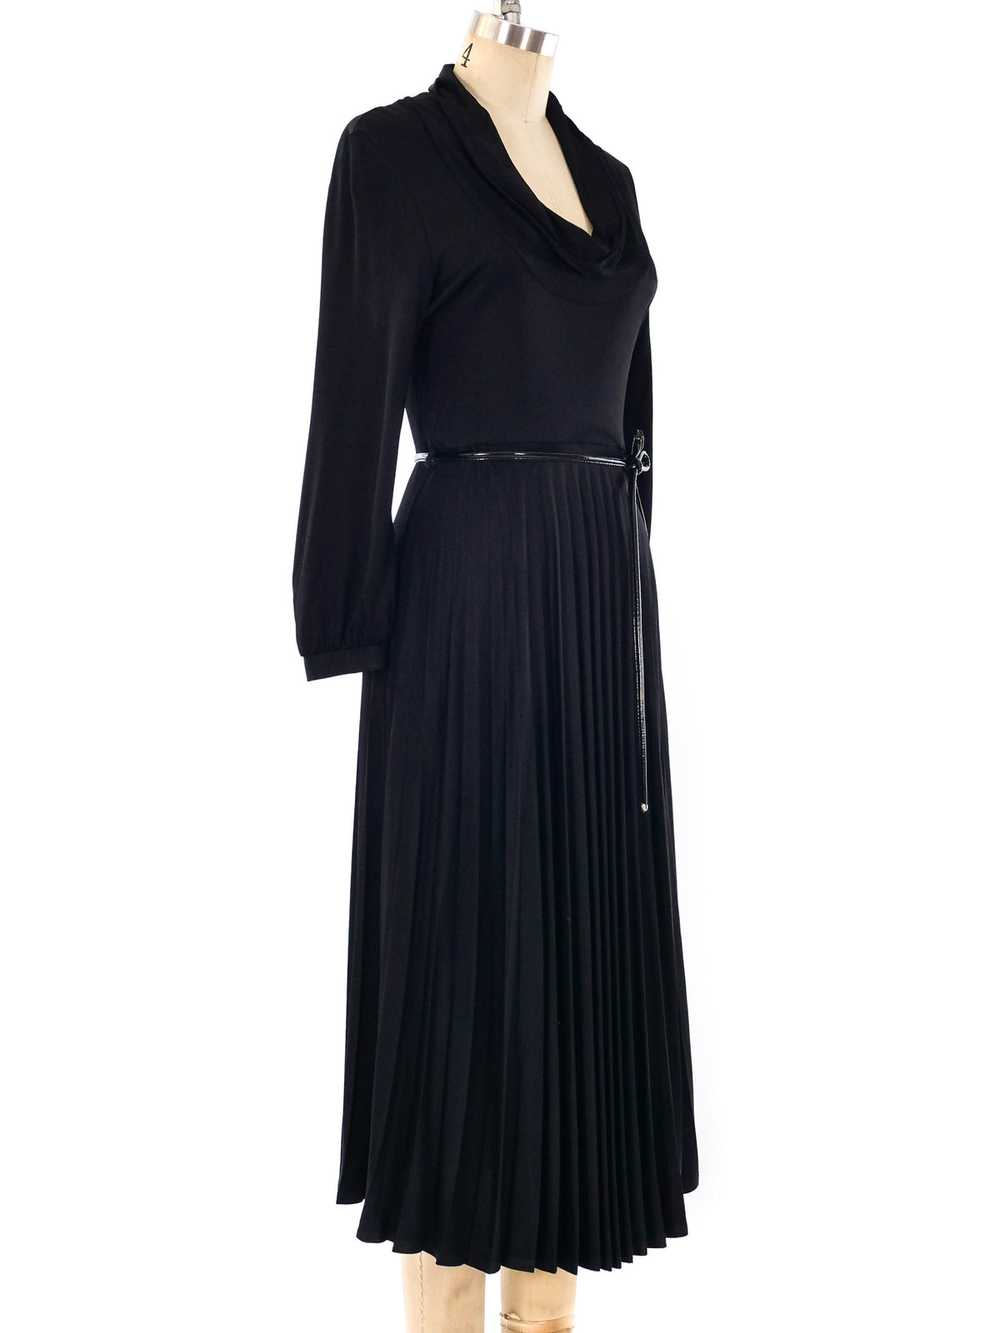 Alexander McQueen Pleated Jersey Dress - image 3